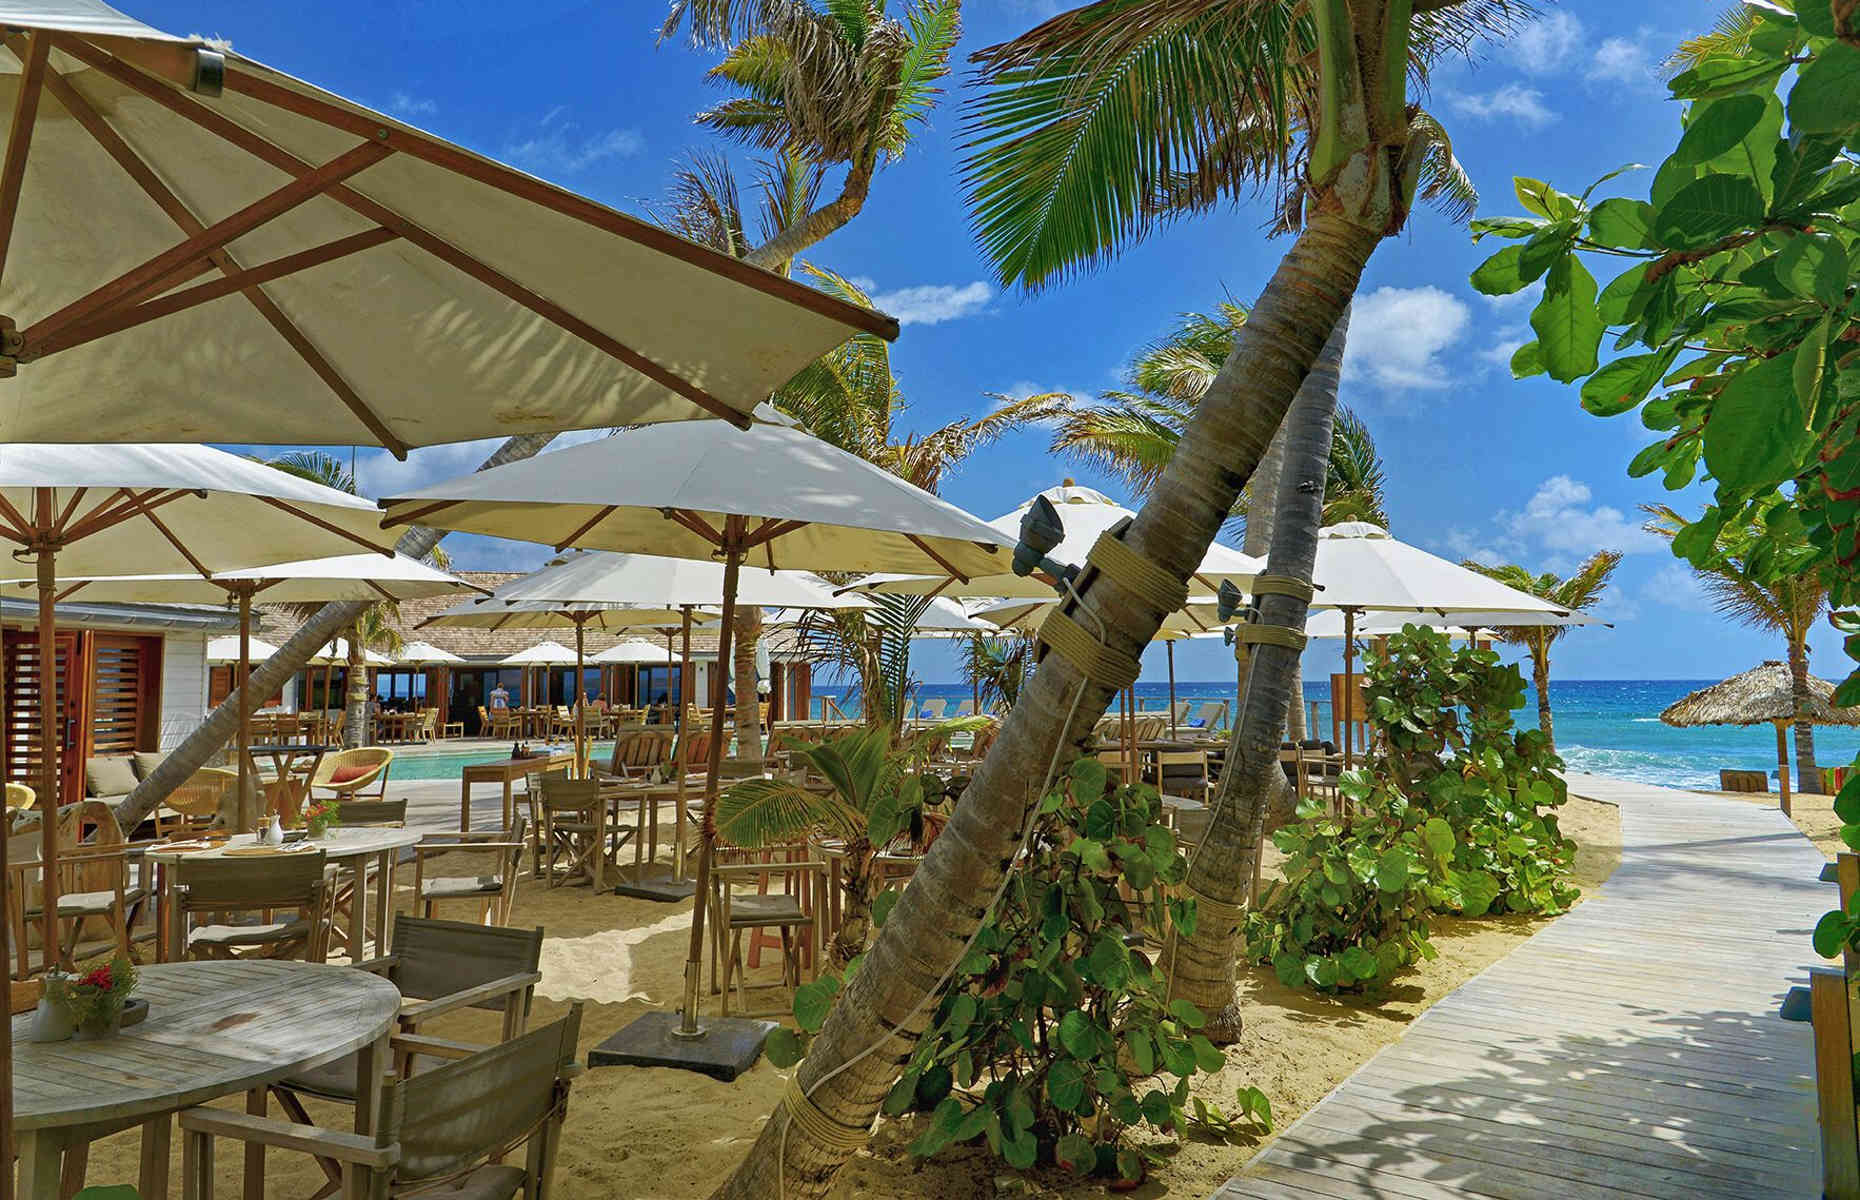 Restaurant plage Hôtel Manapany - Hotel St Barthélemy, Voyage Caraïbes